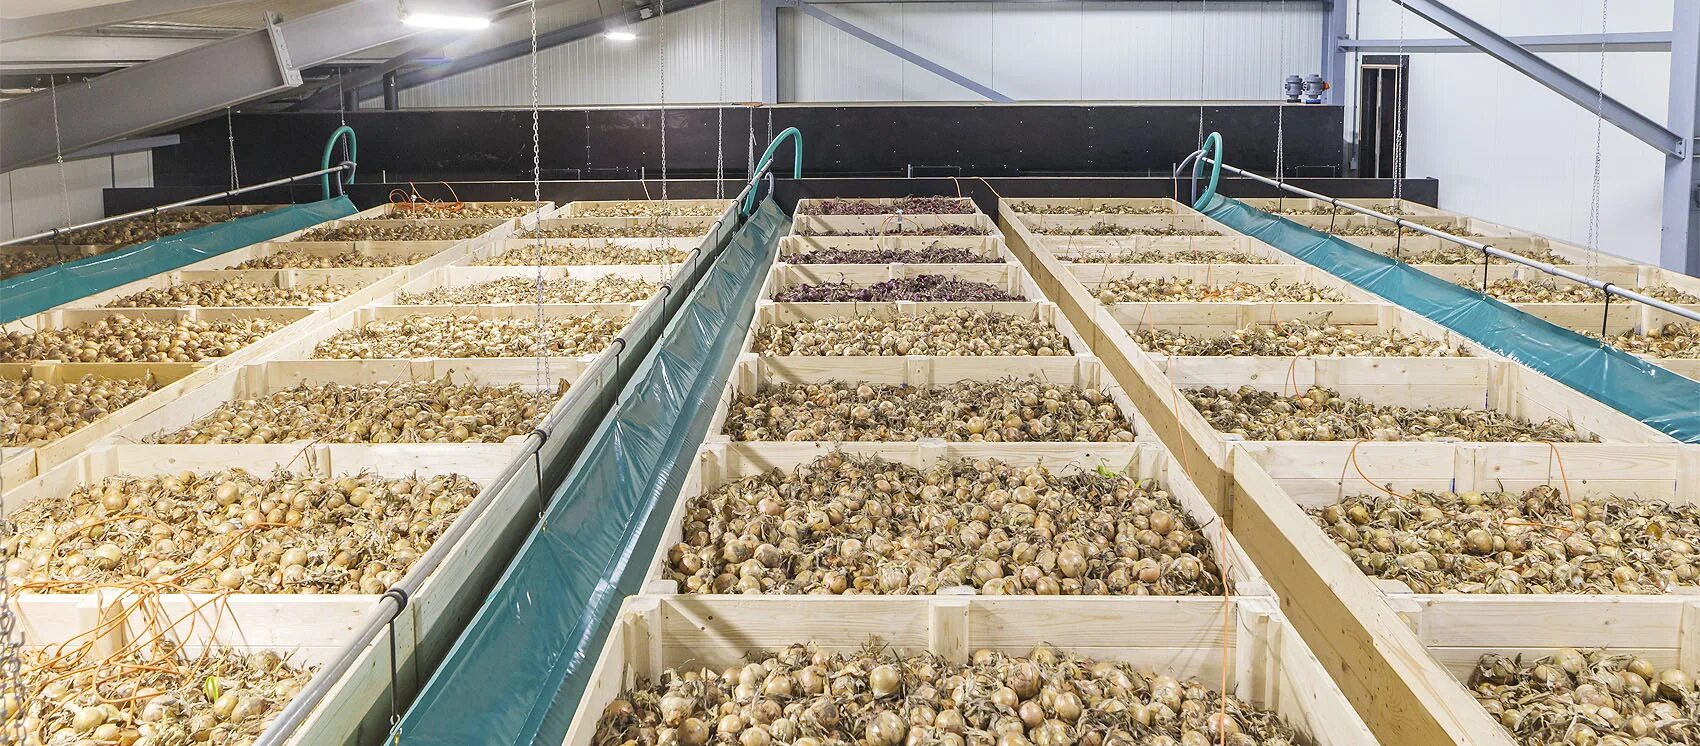 Овощехранилище картофелехранилище. Картофелехранилище на 100 тонн. Овощехранилище ФСИН.